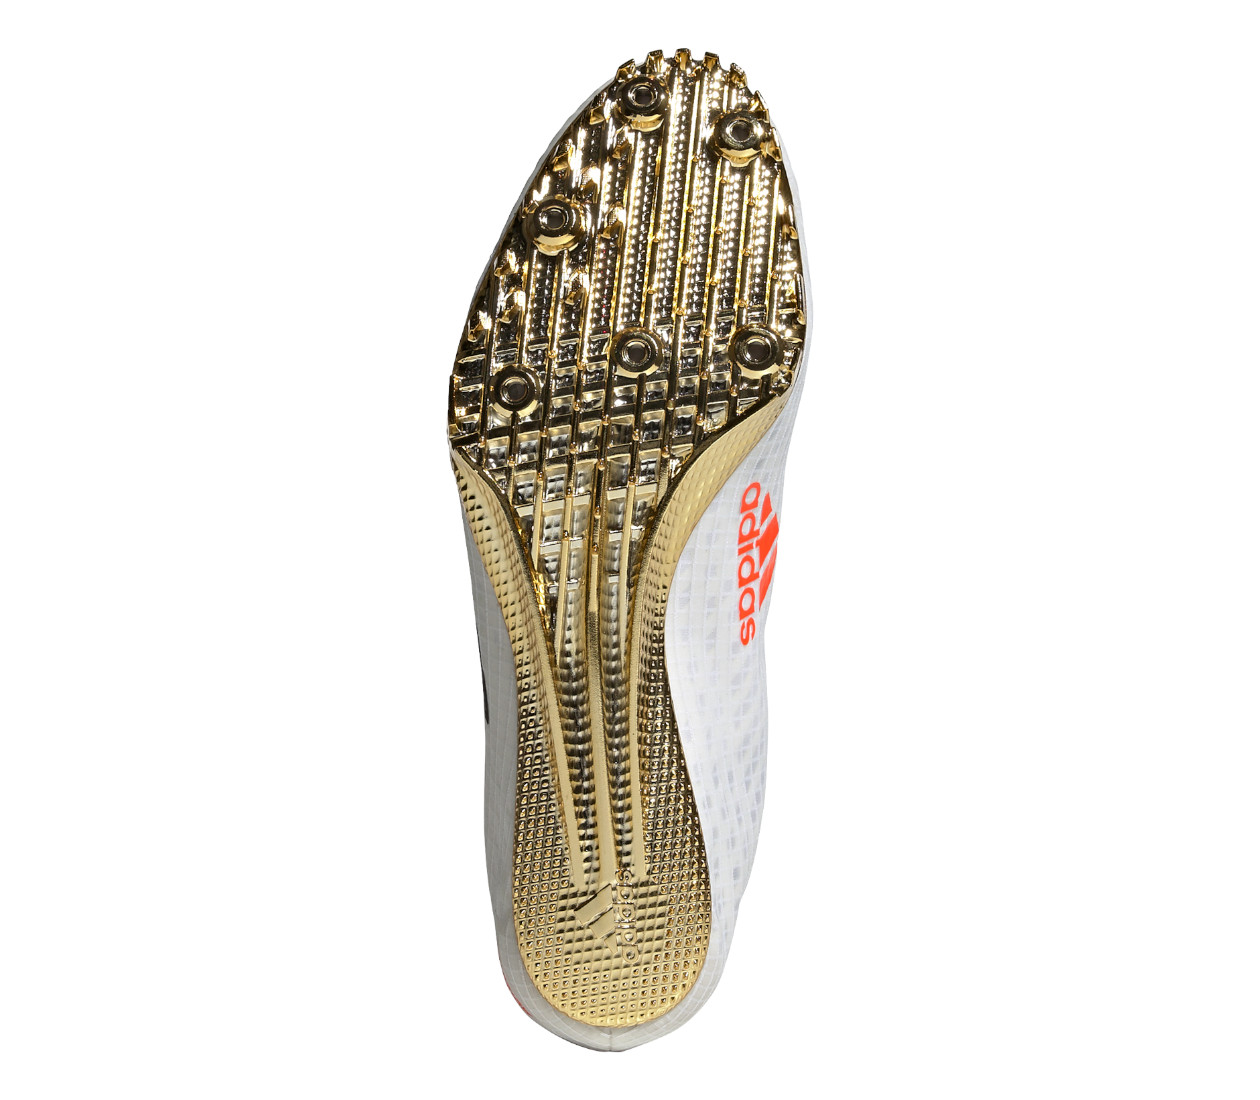 Adidas Adizero Finesse (U) Scarpe chiodate per 200 e 400 metri | LBM Sport